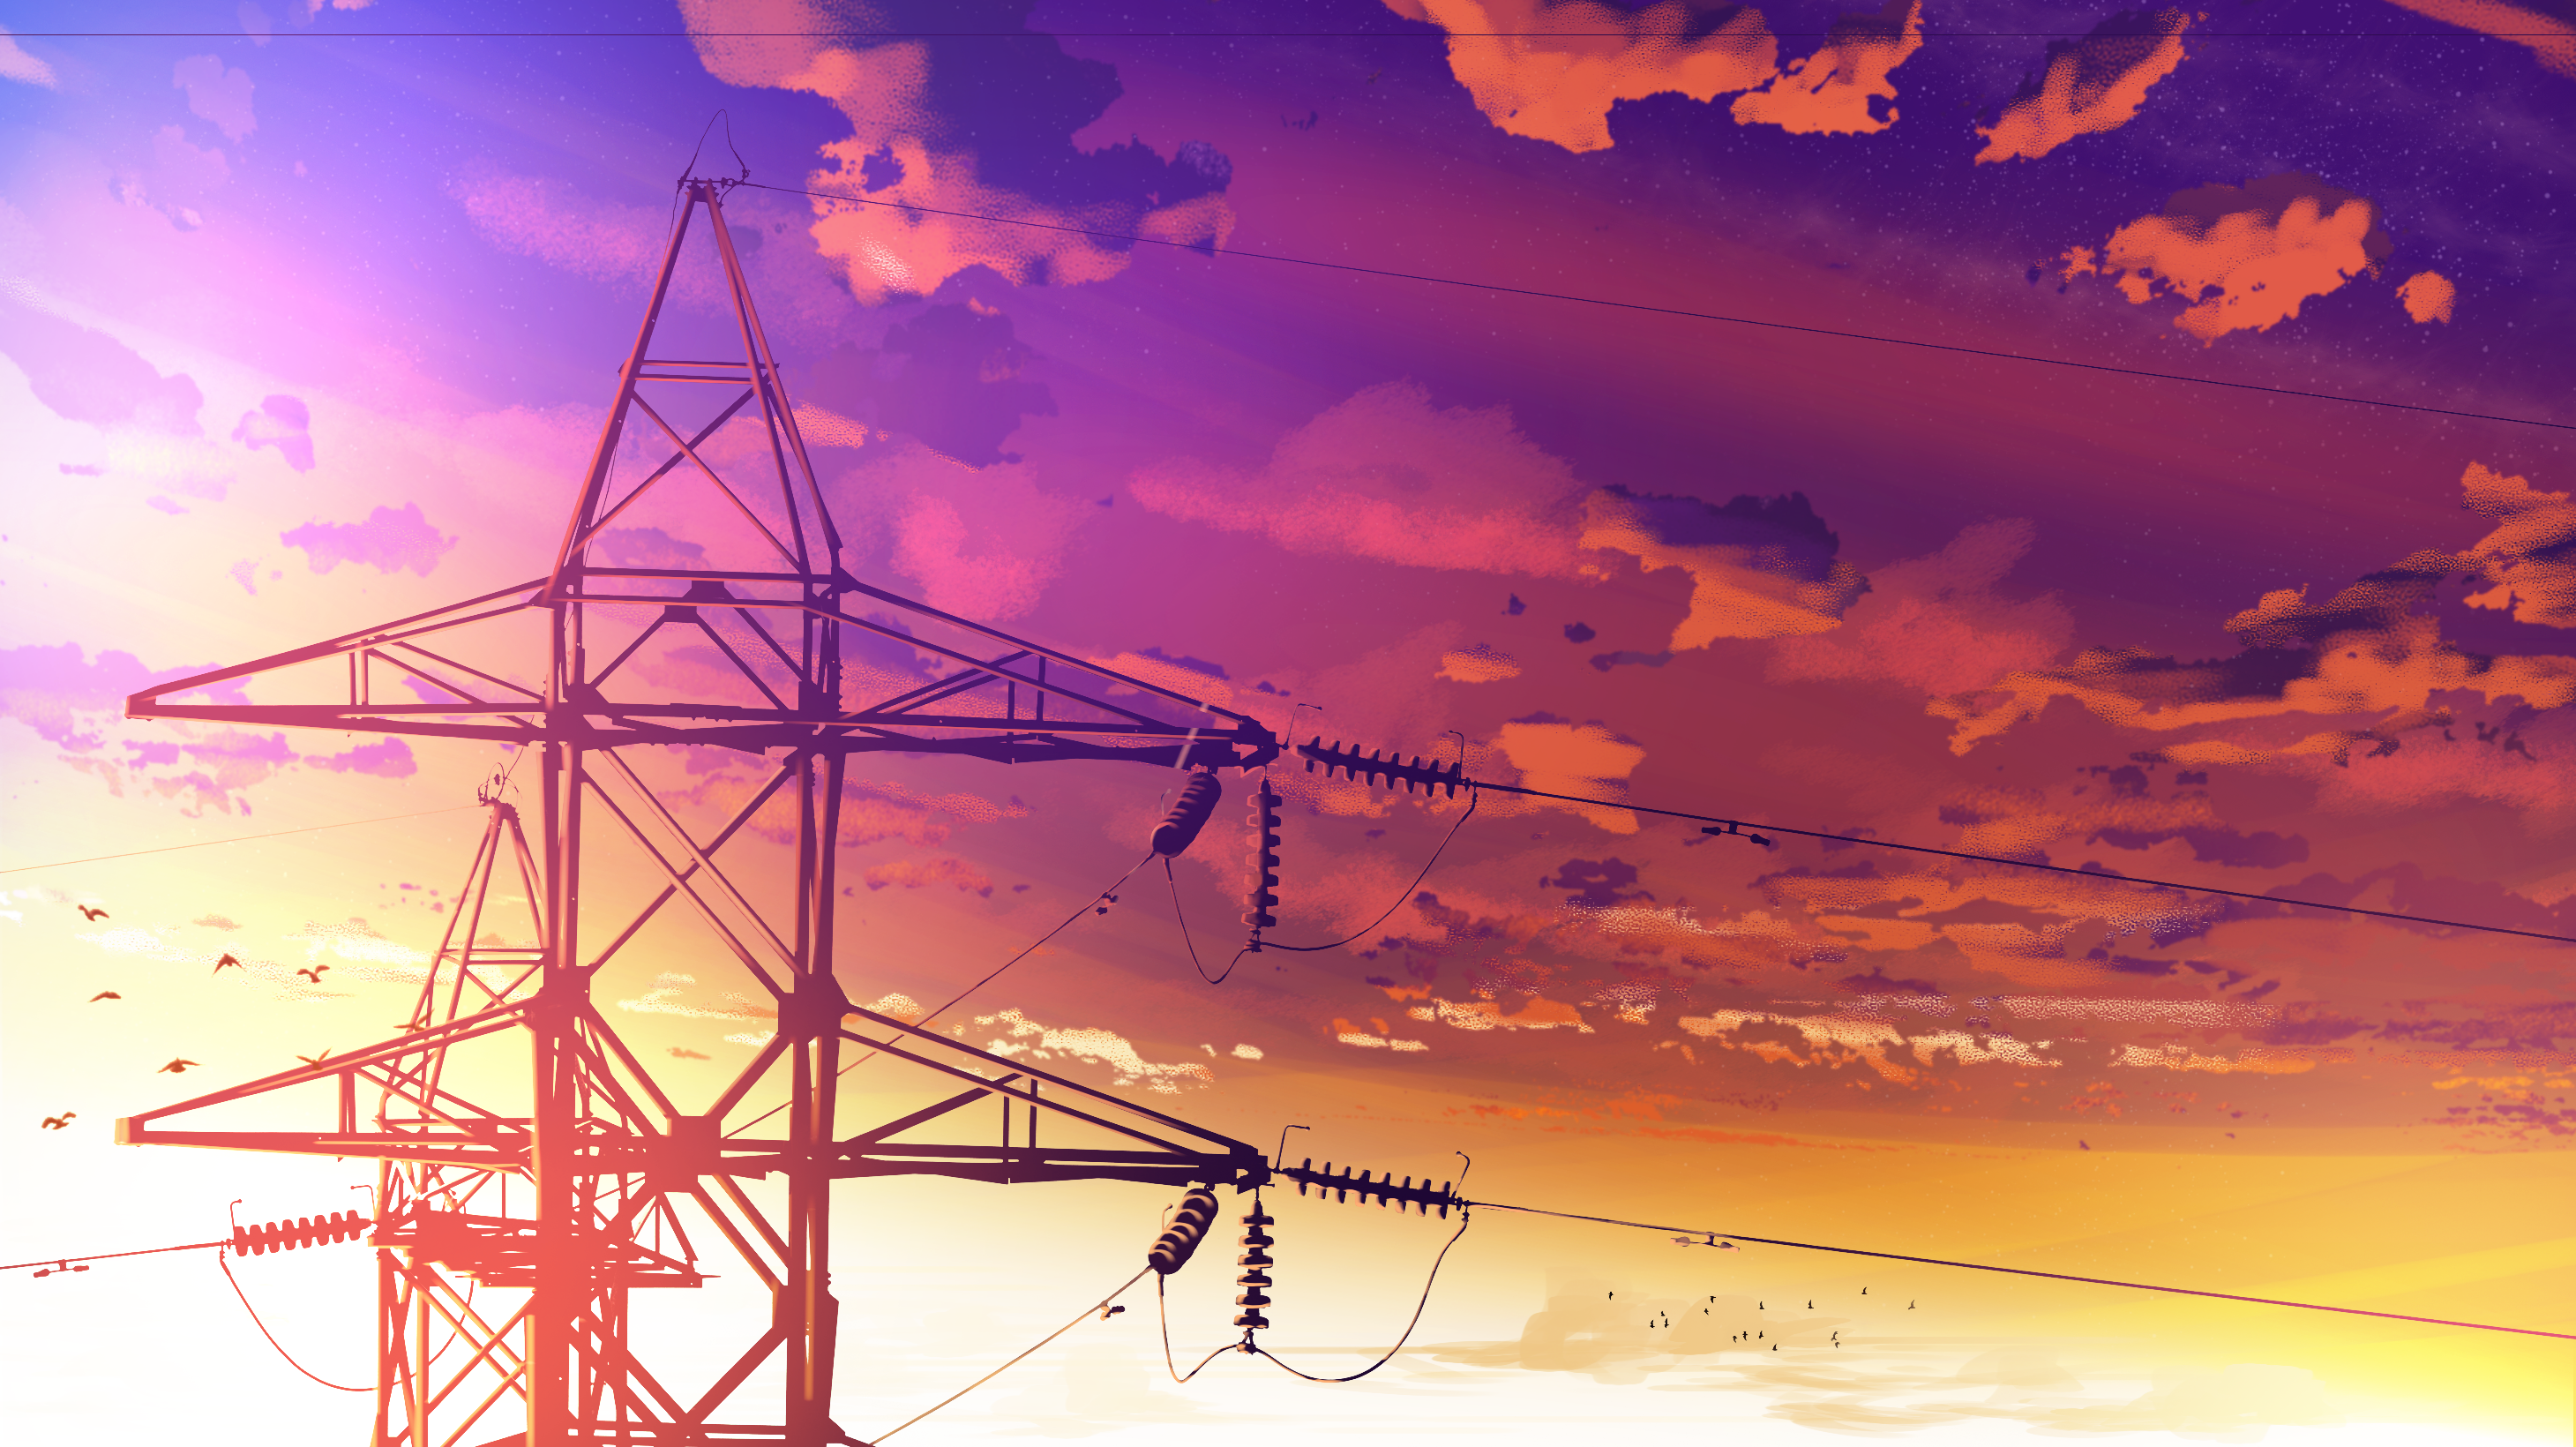 Anime Sunset Beach Background by wbd on DeviantArt